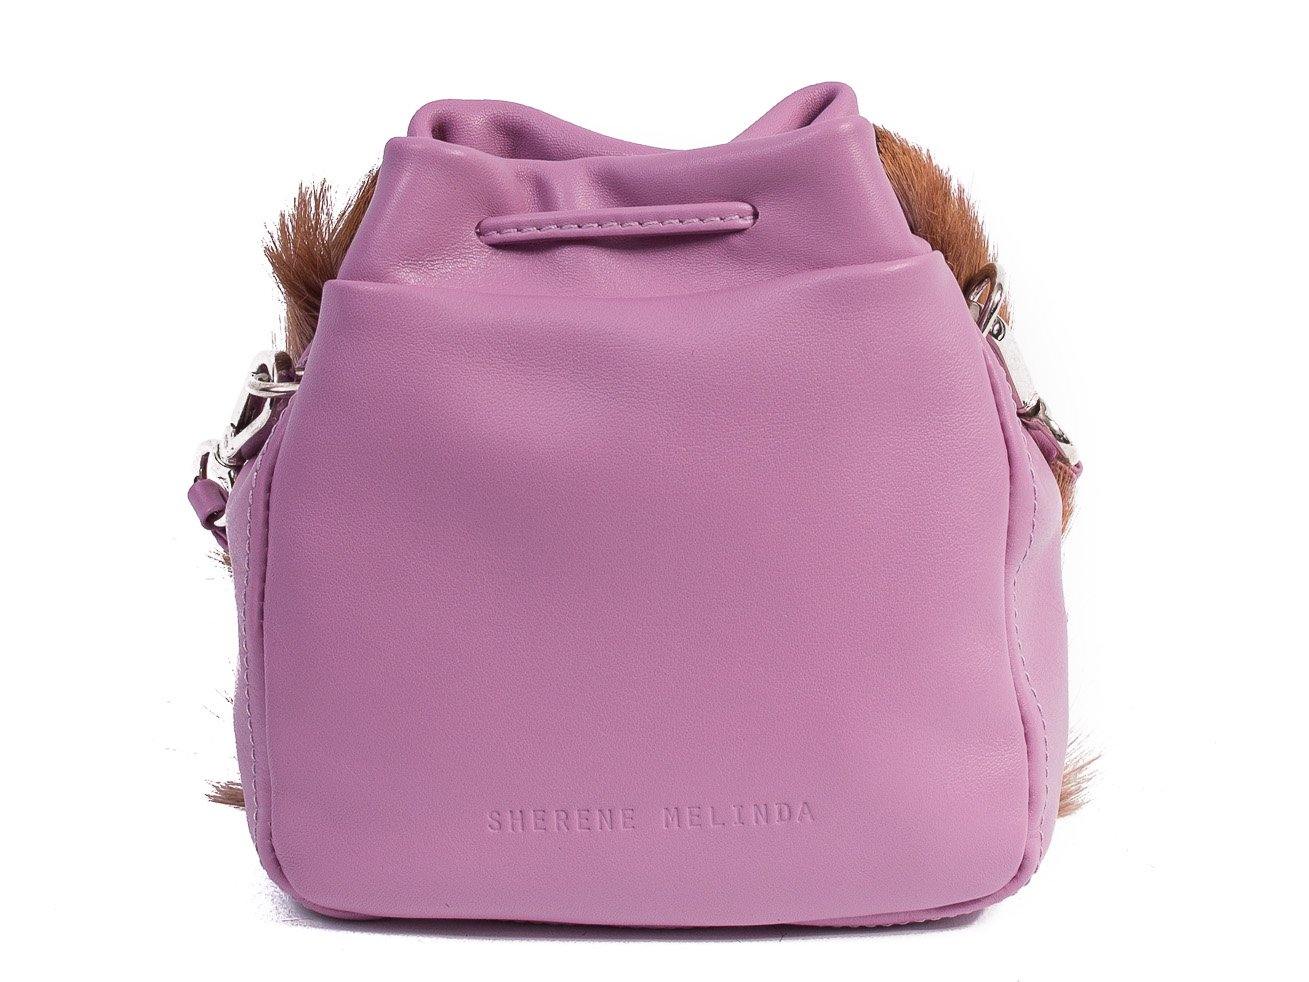 sherene melinda springbok hair-on-hide lavender leather stripe pouch bag back